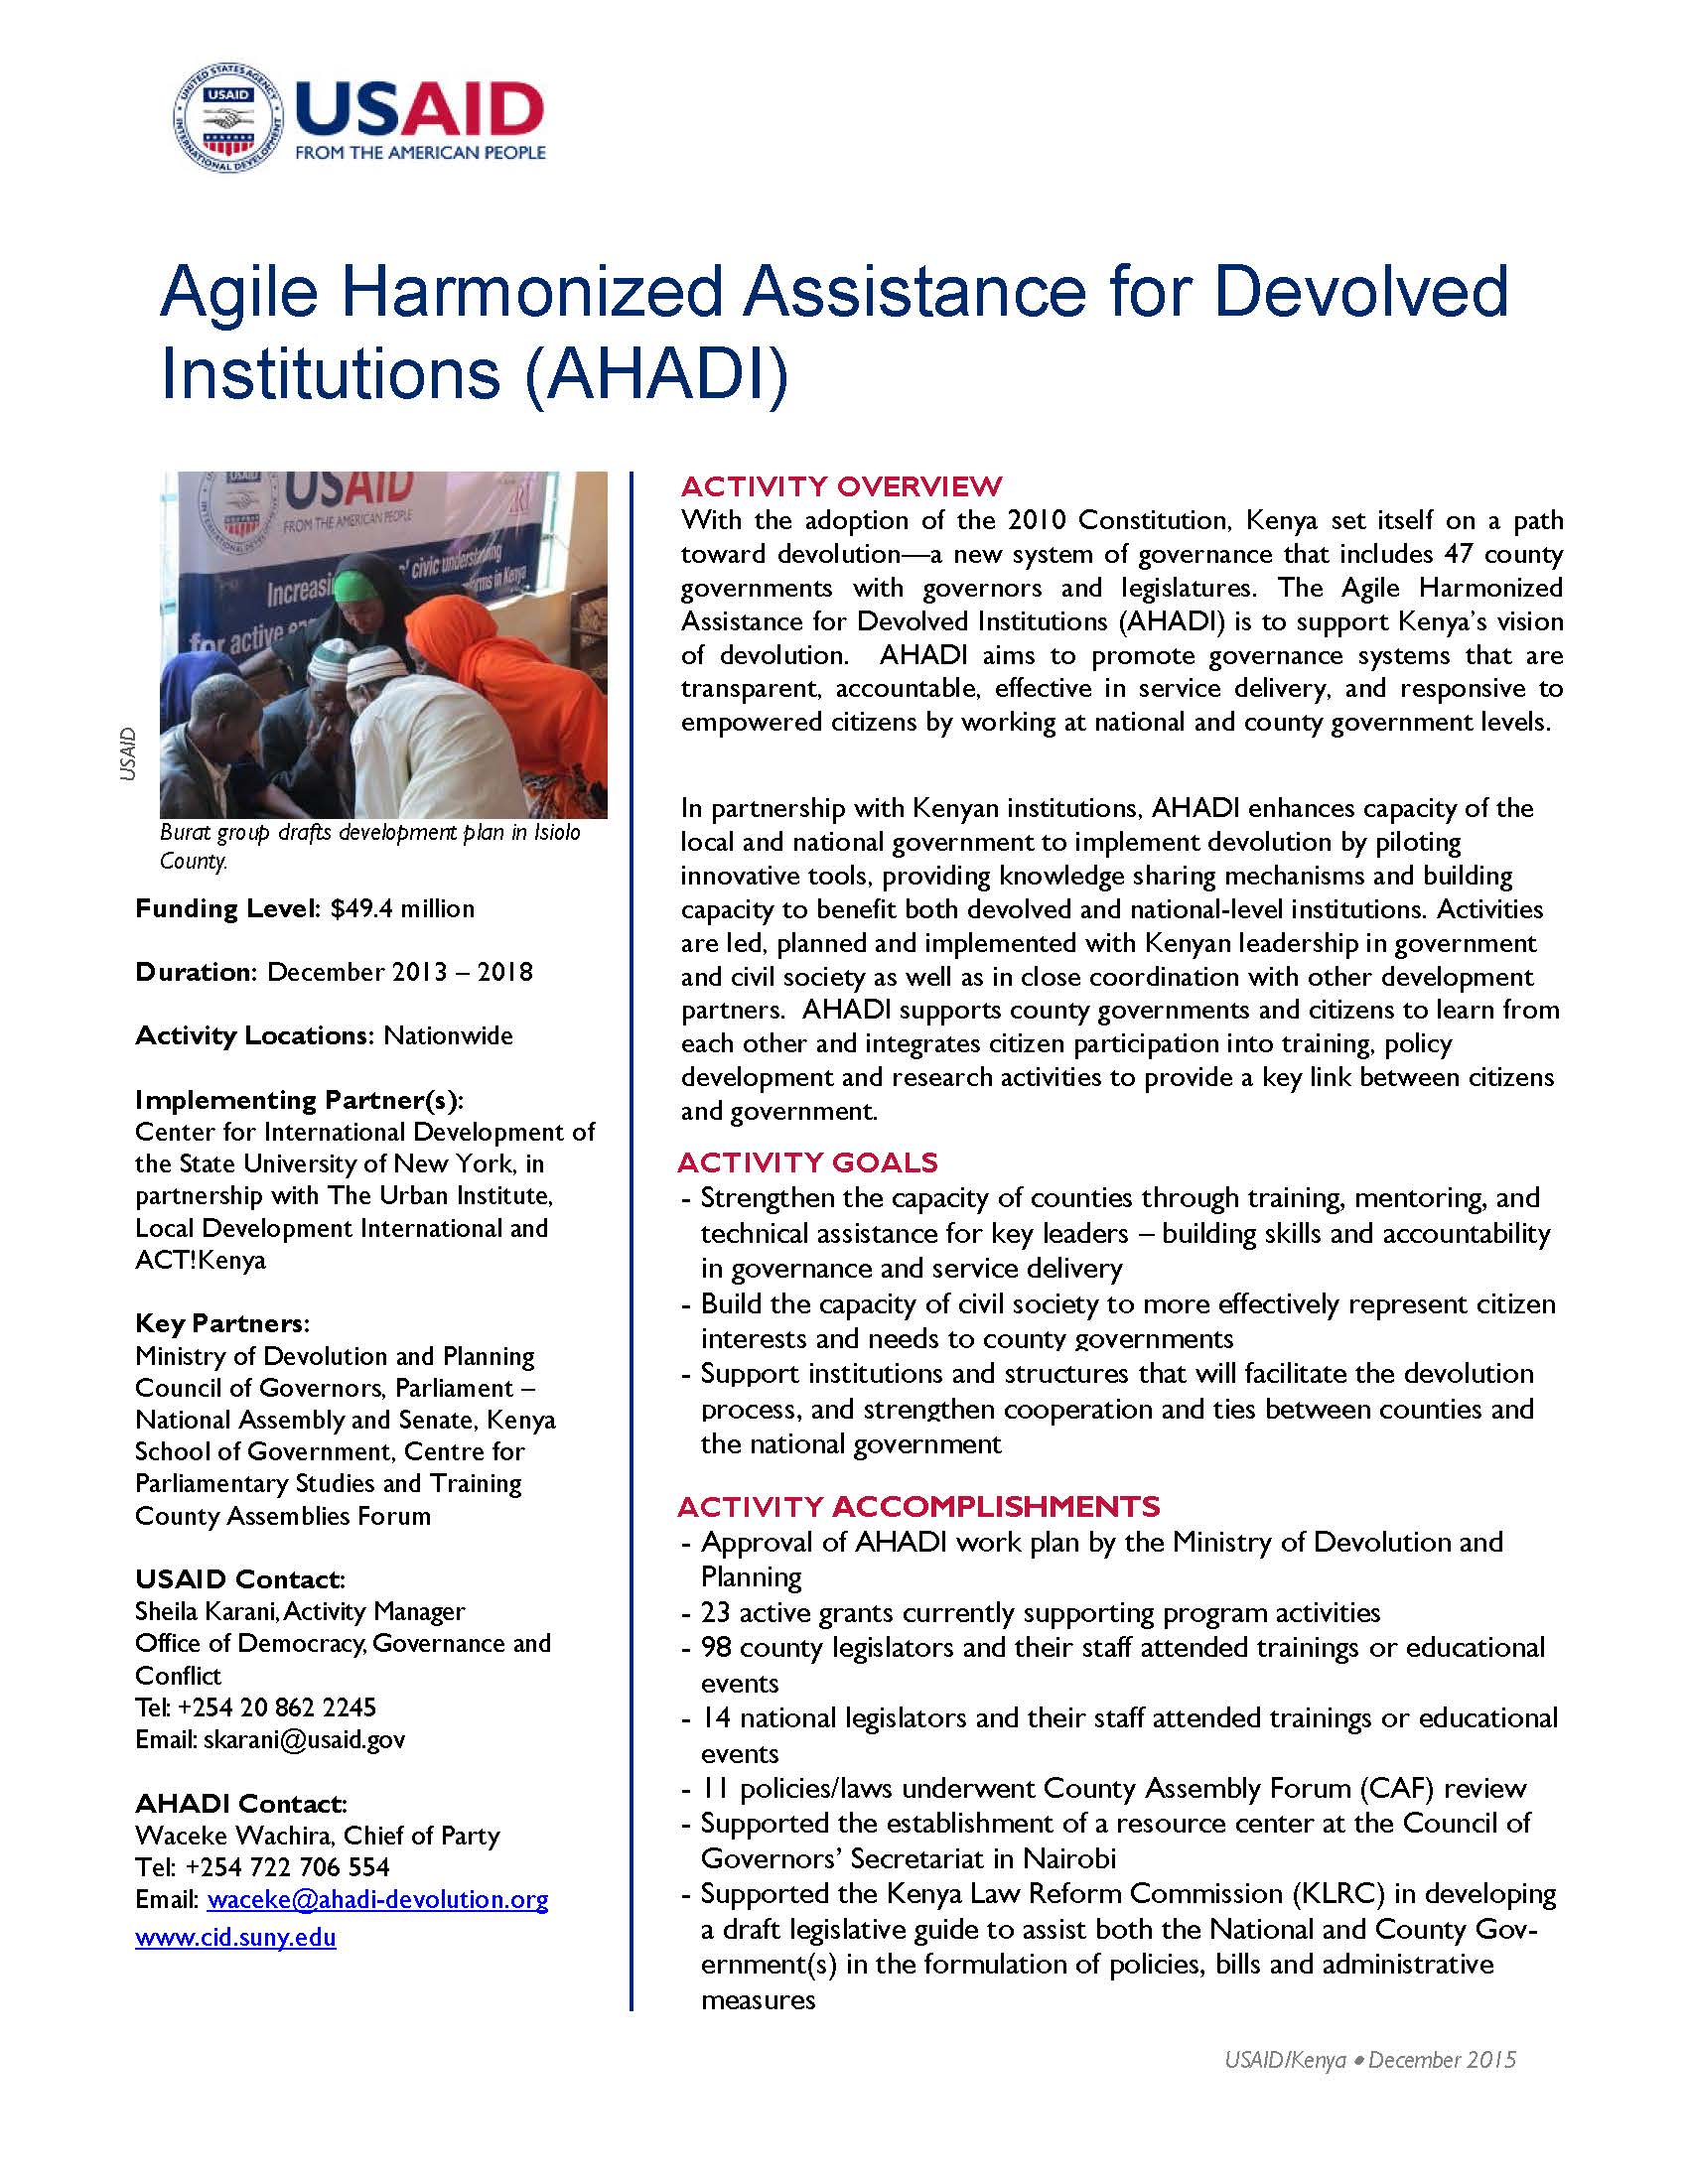 Agile Harmonized Assistance for Devolved Institutions (AHADI)